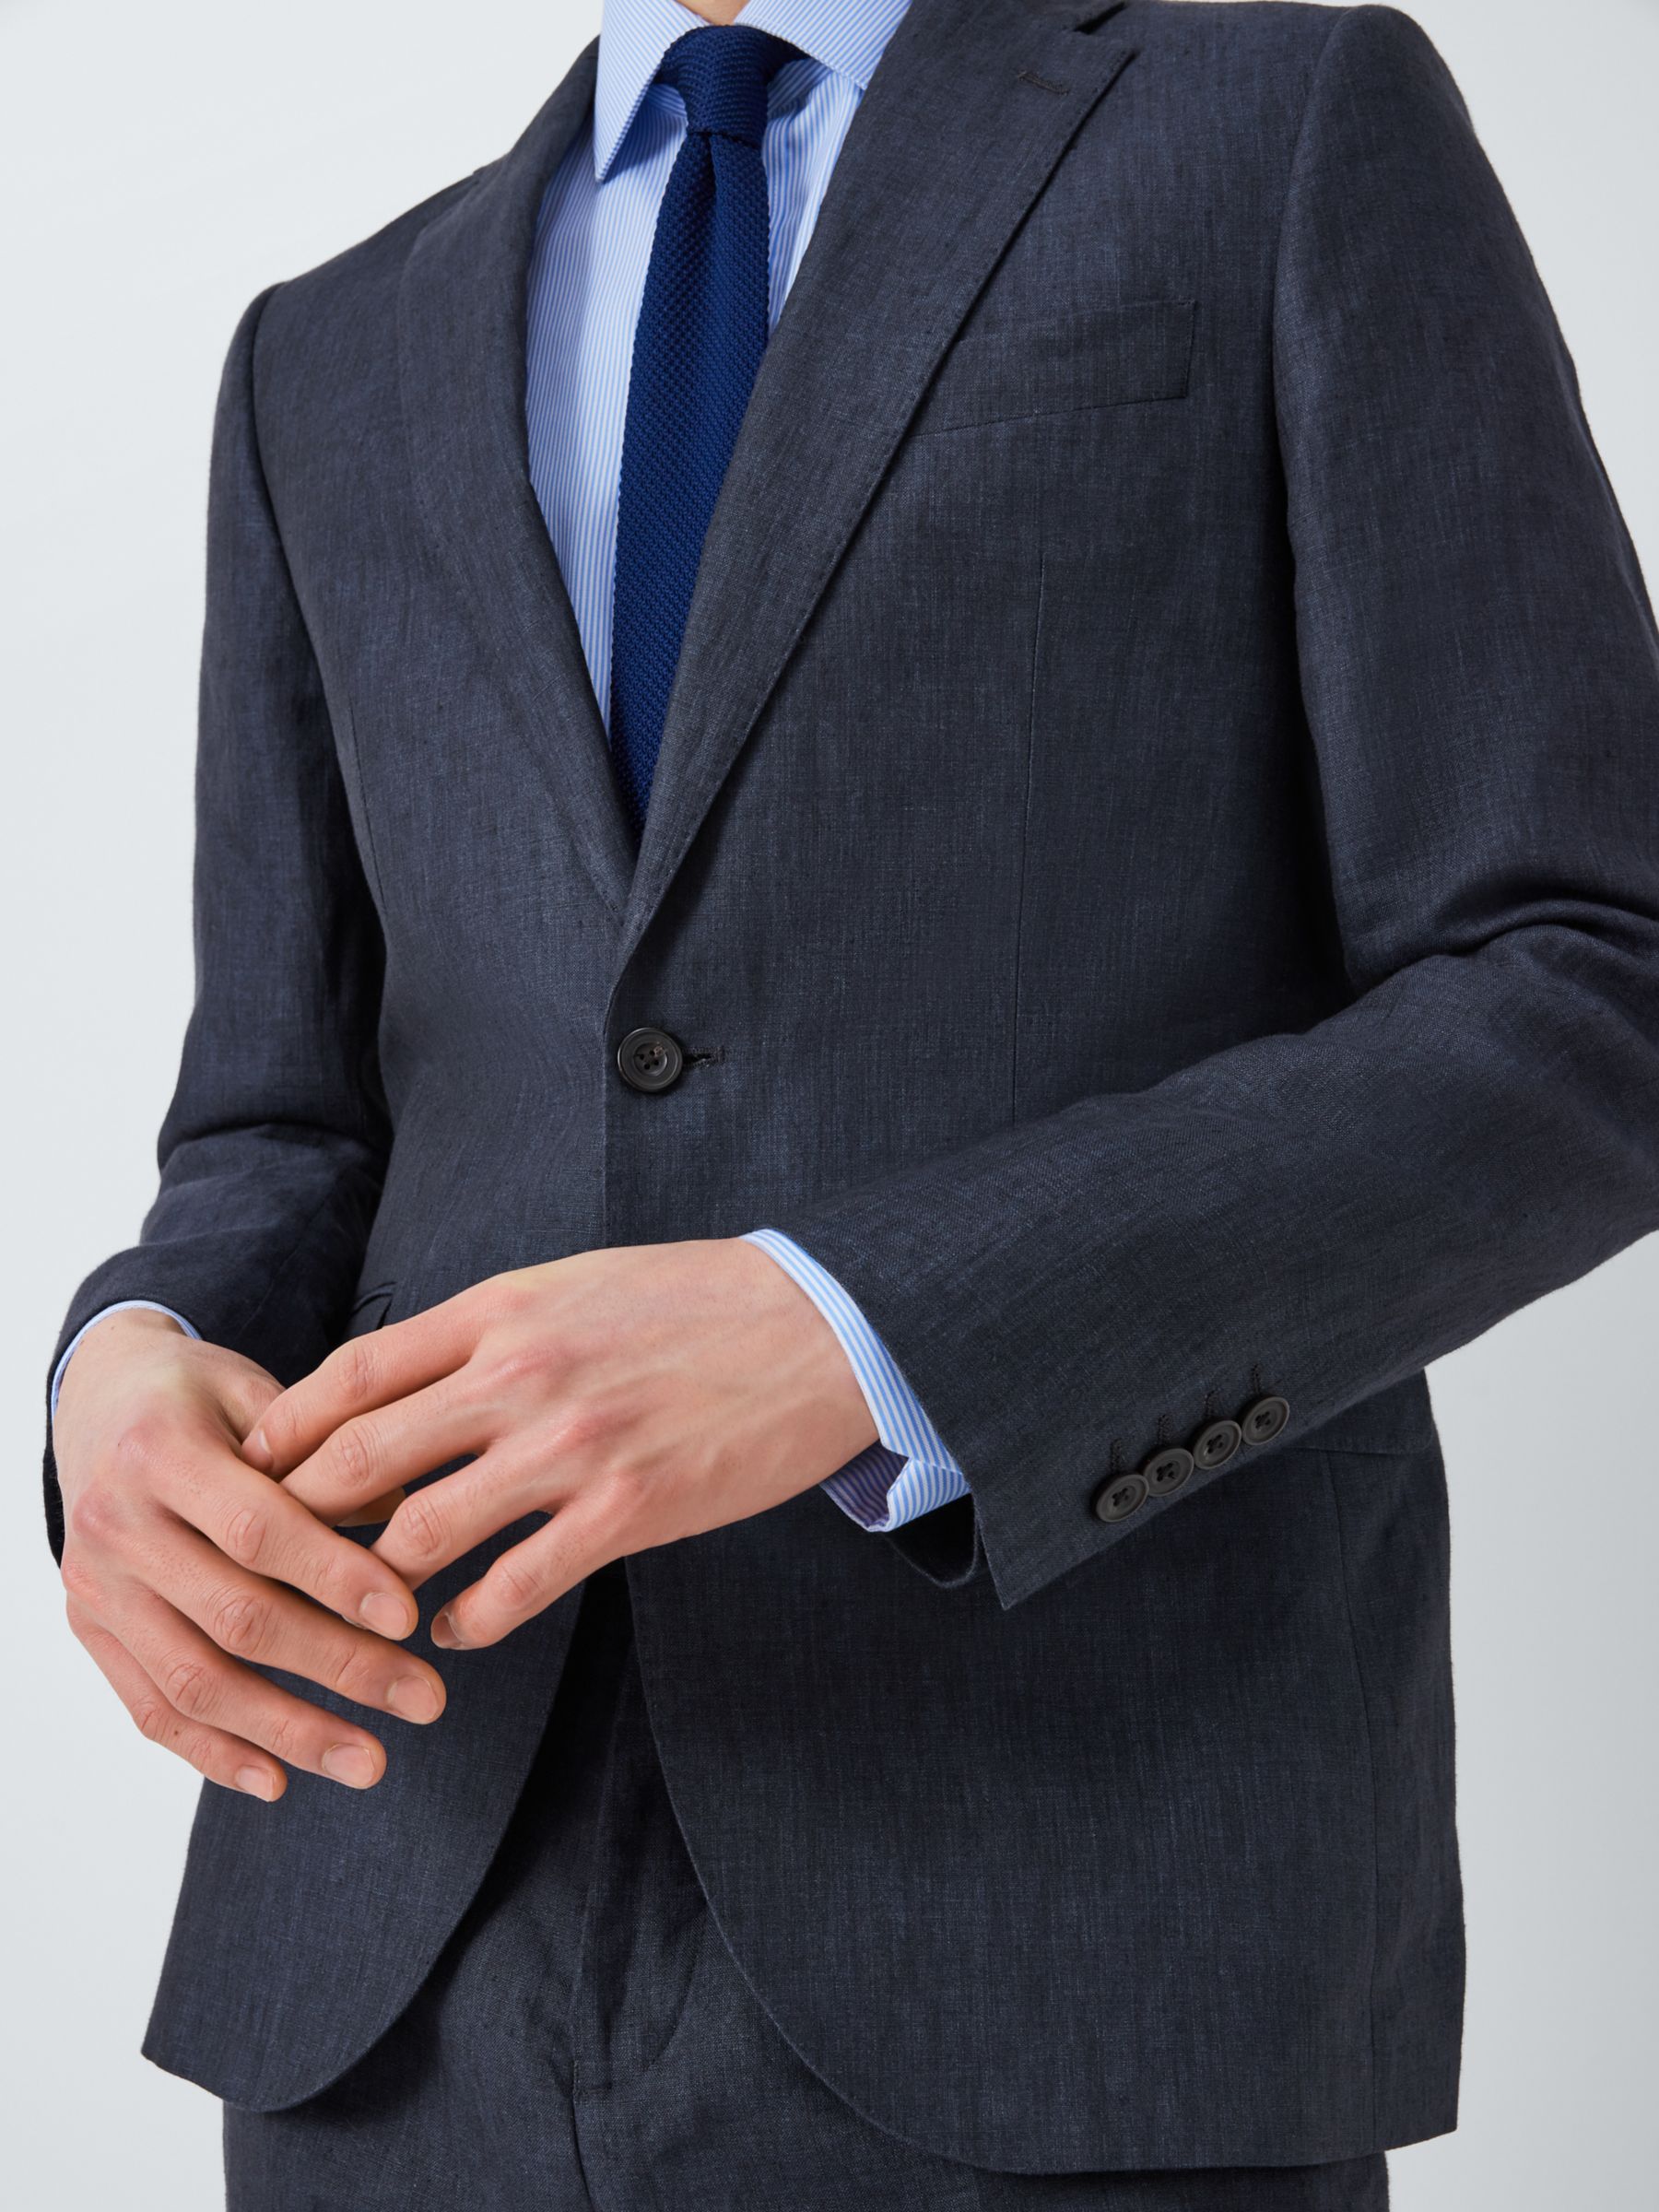 John Lewis Cambridge Linen Single Breasted Regular Fit Suit Jacket, Navy, 42S